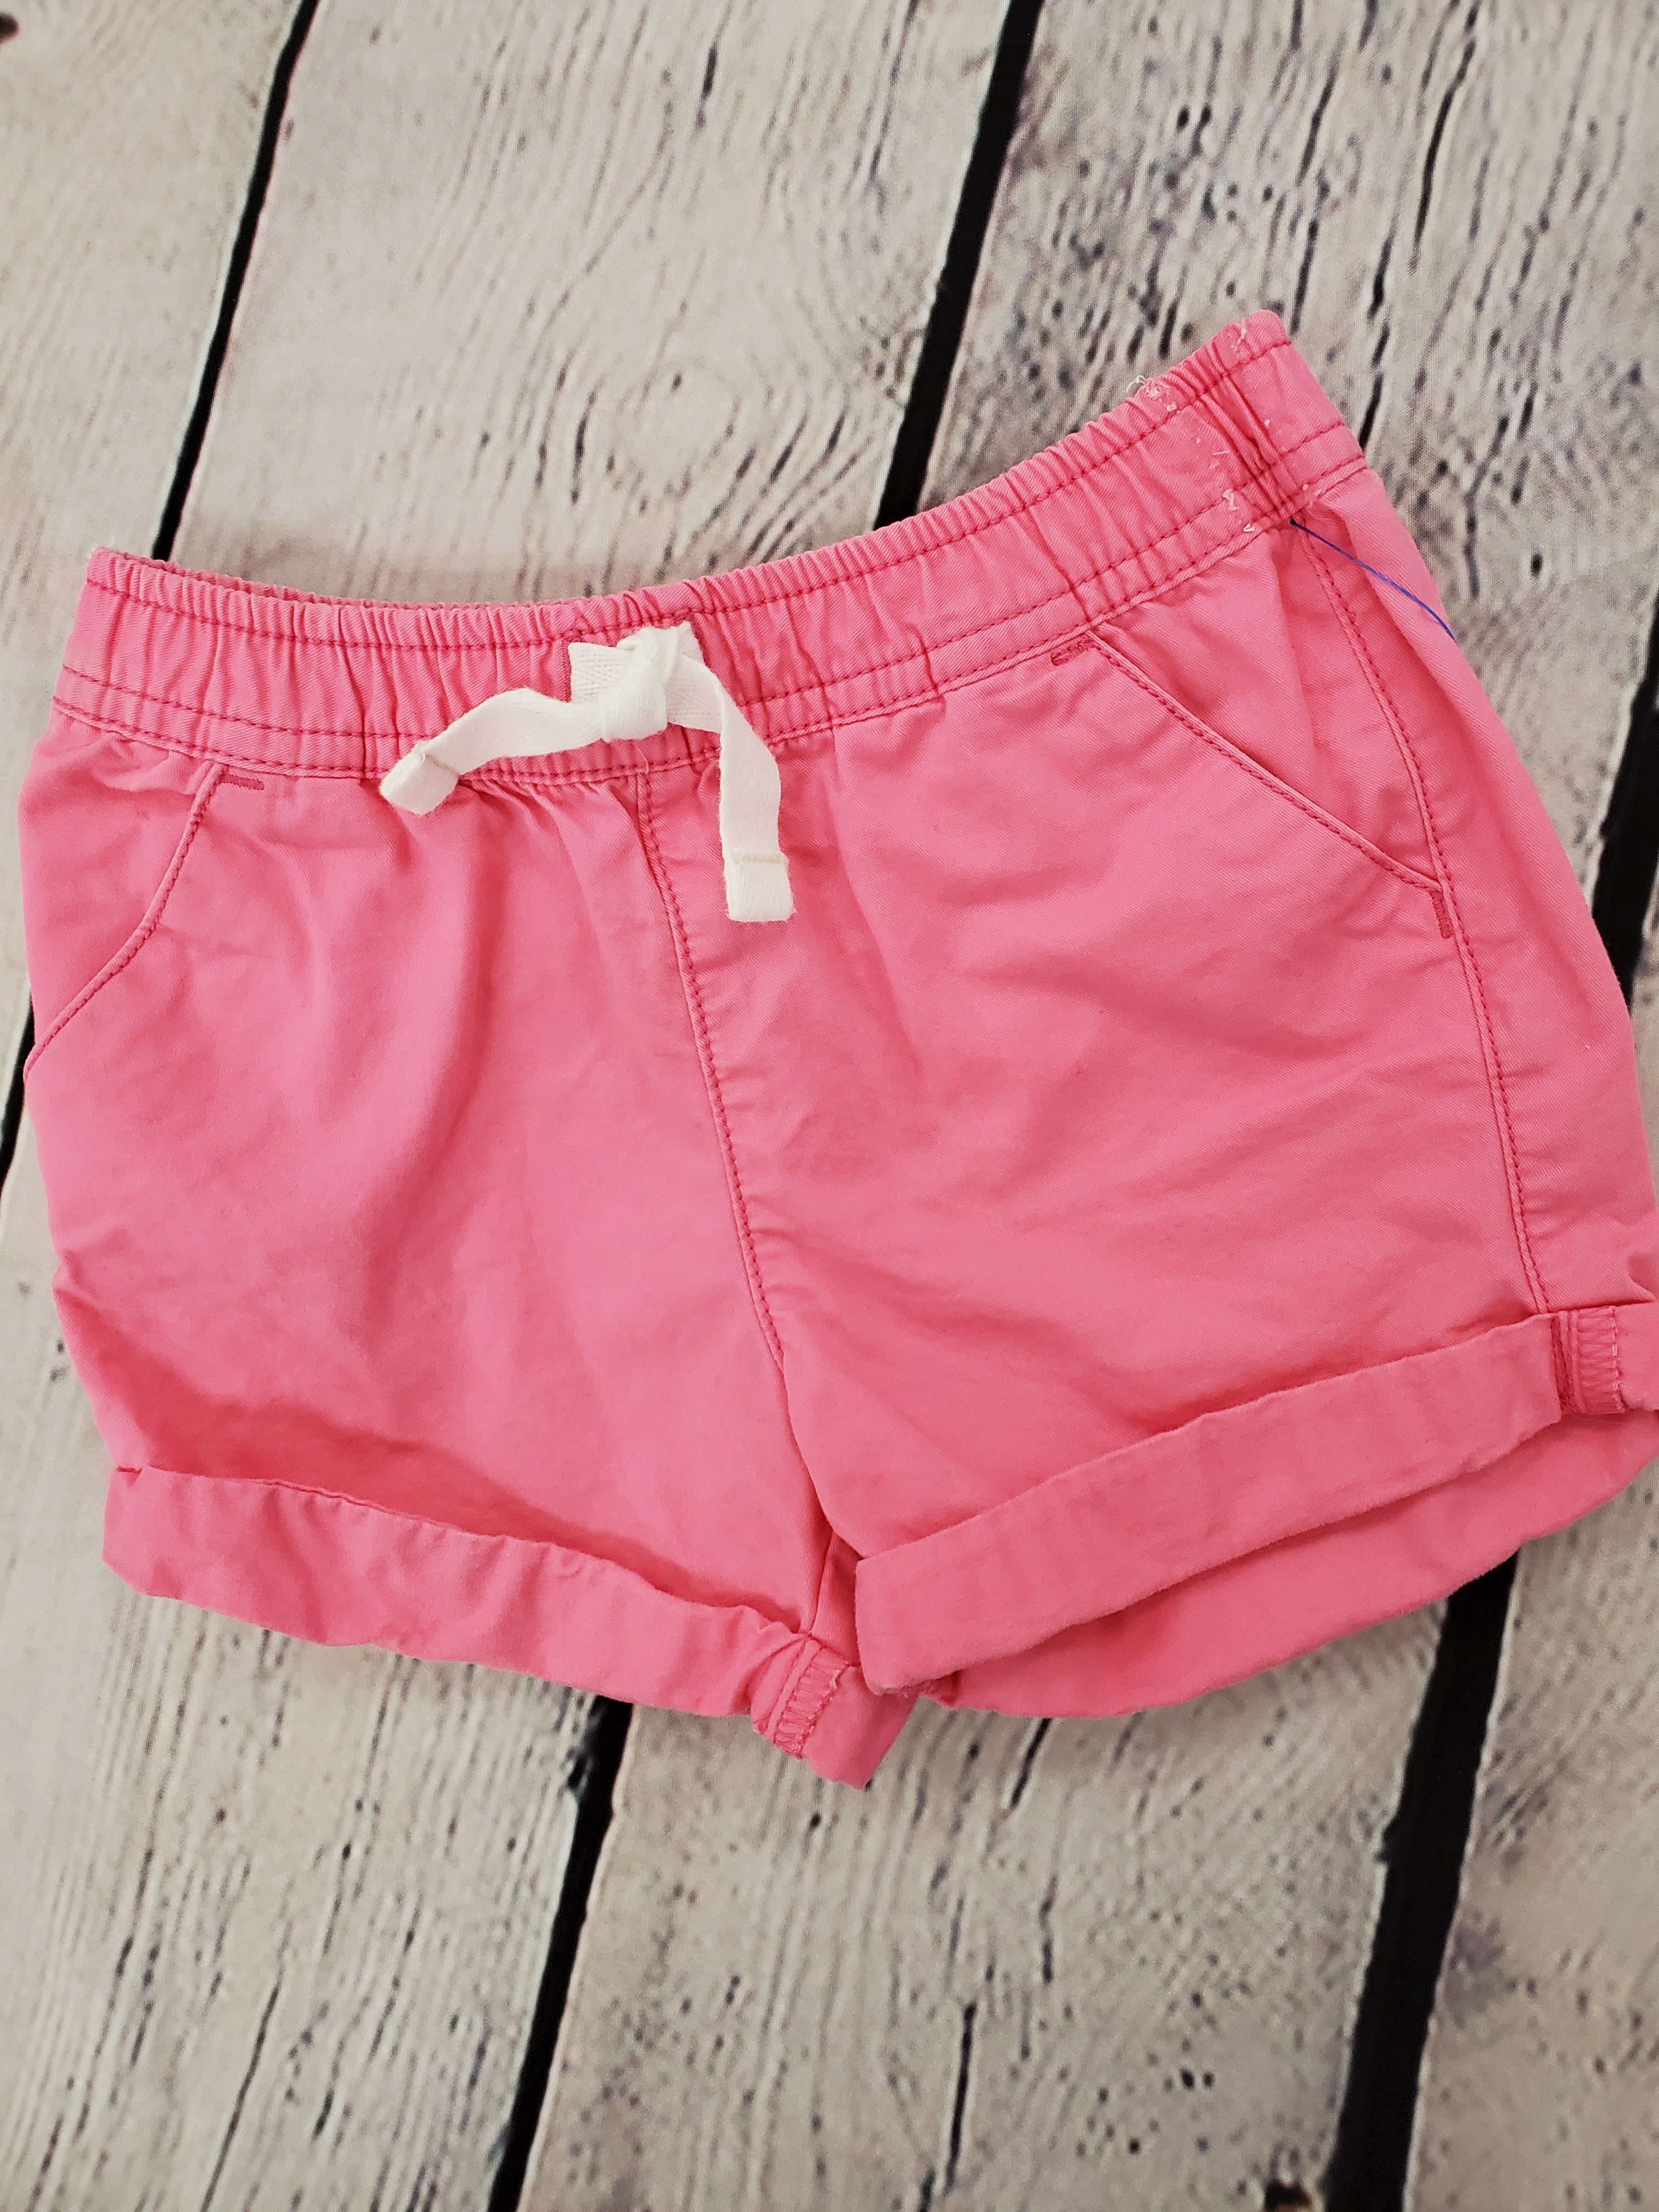 Carter's pink cuffed shorts sz 3T